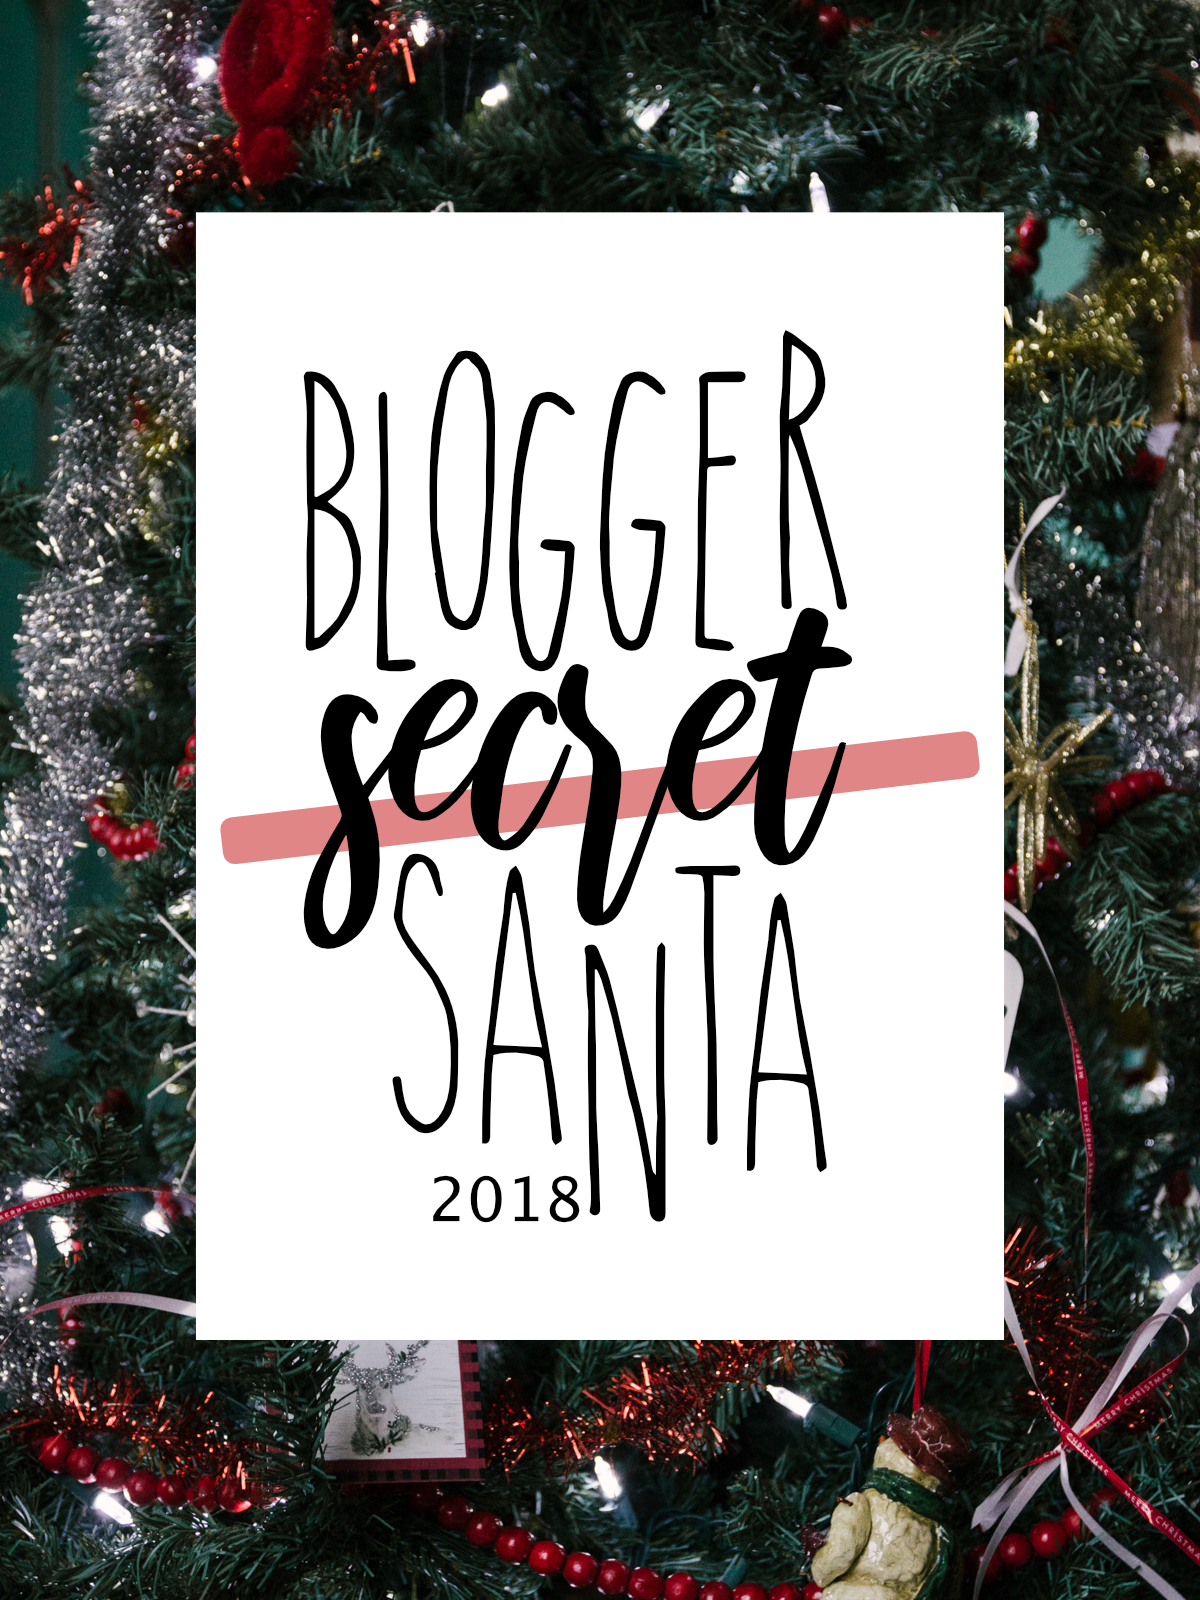 2018 Blogger Secret Santa Cover